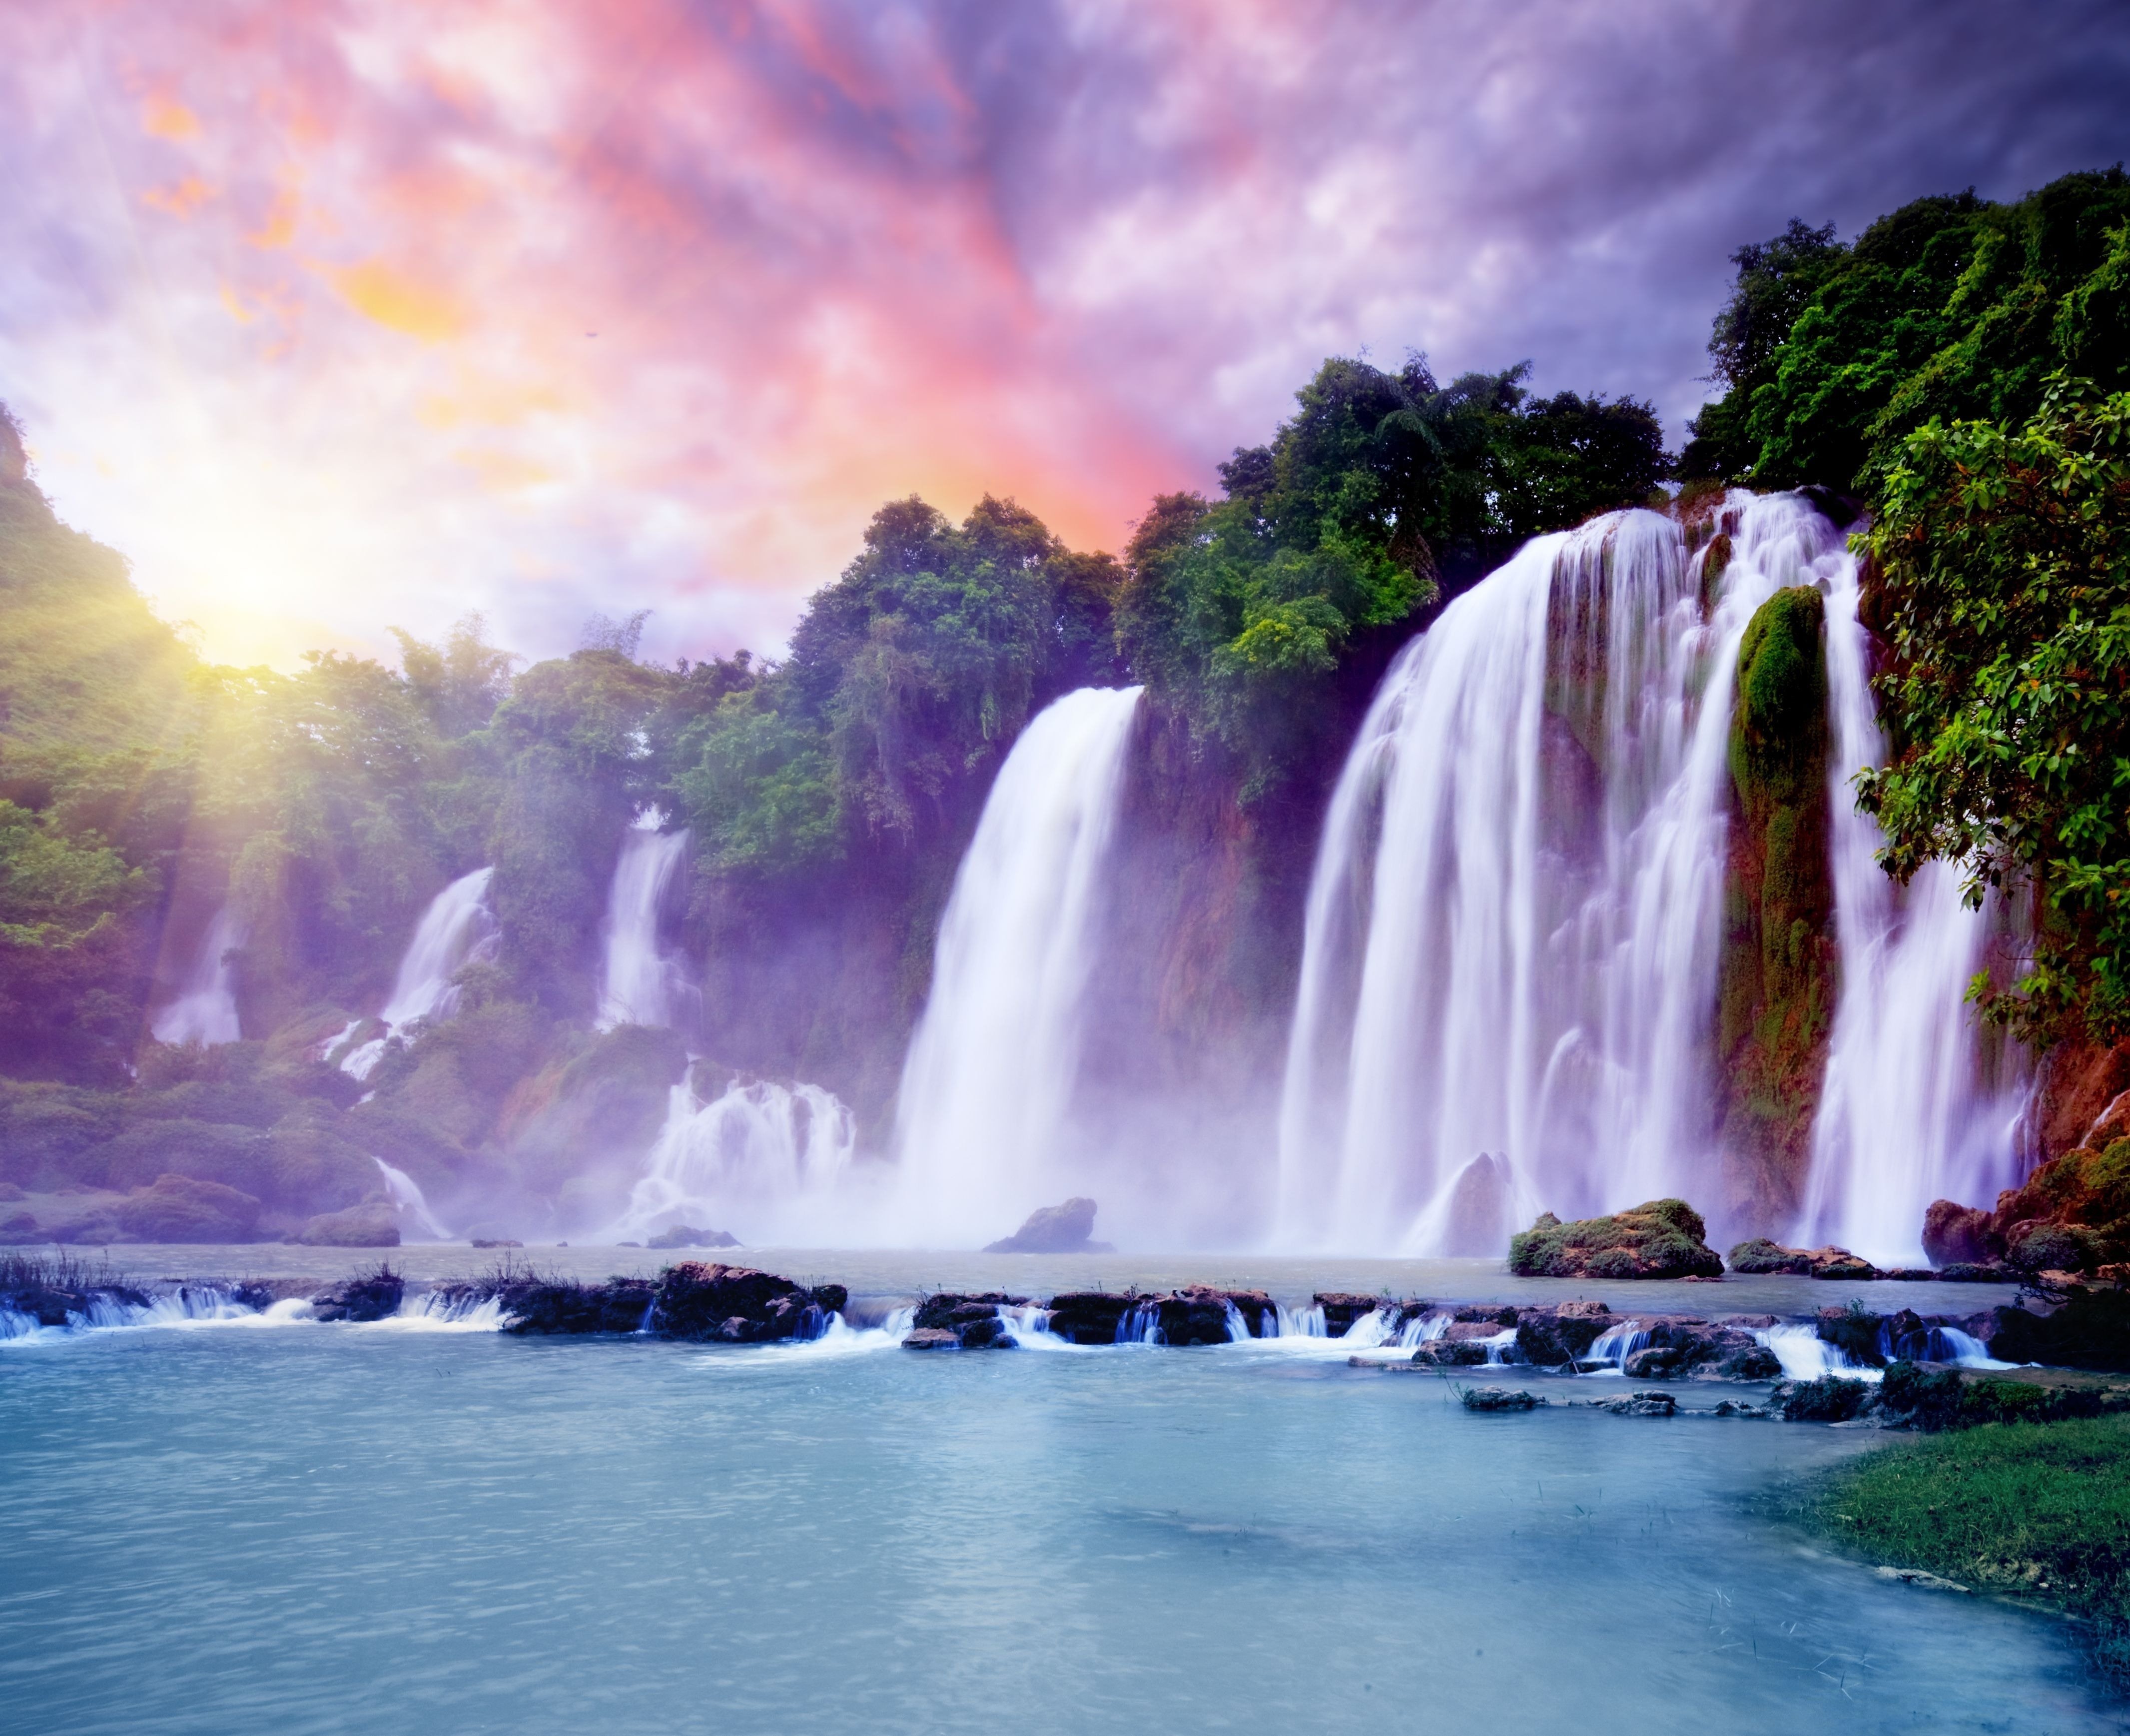 Картинки очень. Air Terjun водопад. Вриндаван водопады. Пейзаж водопад. Красивые пейзажи с водопадами.